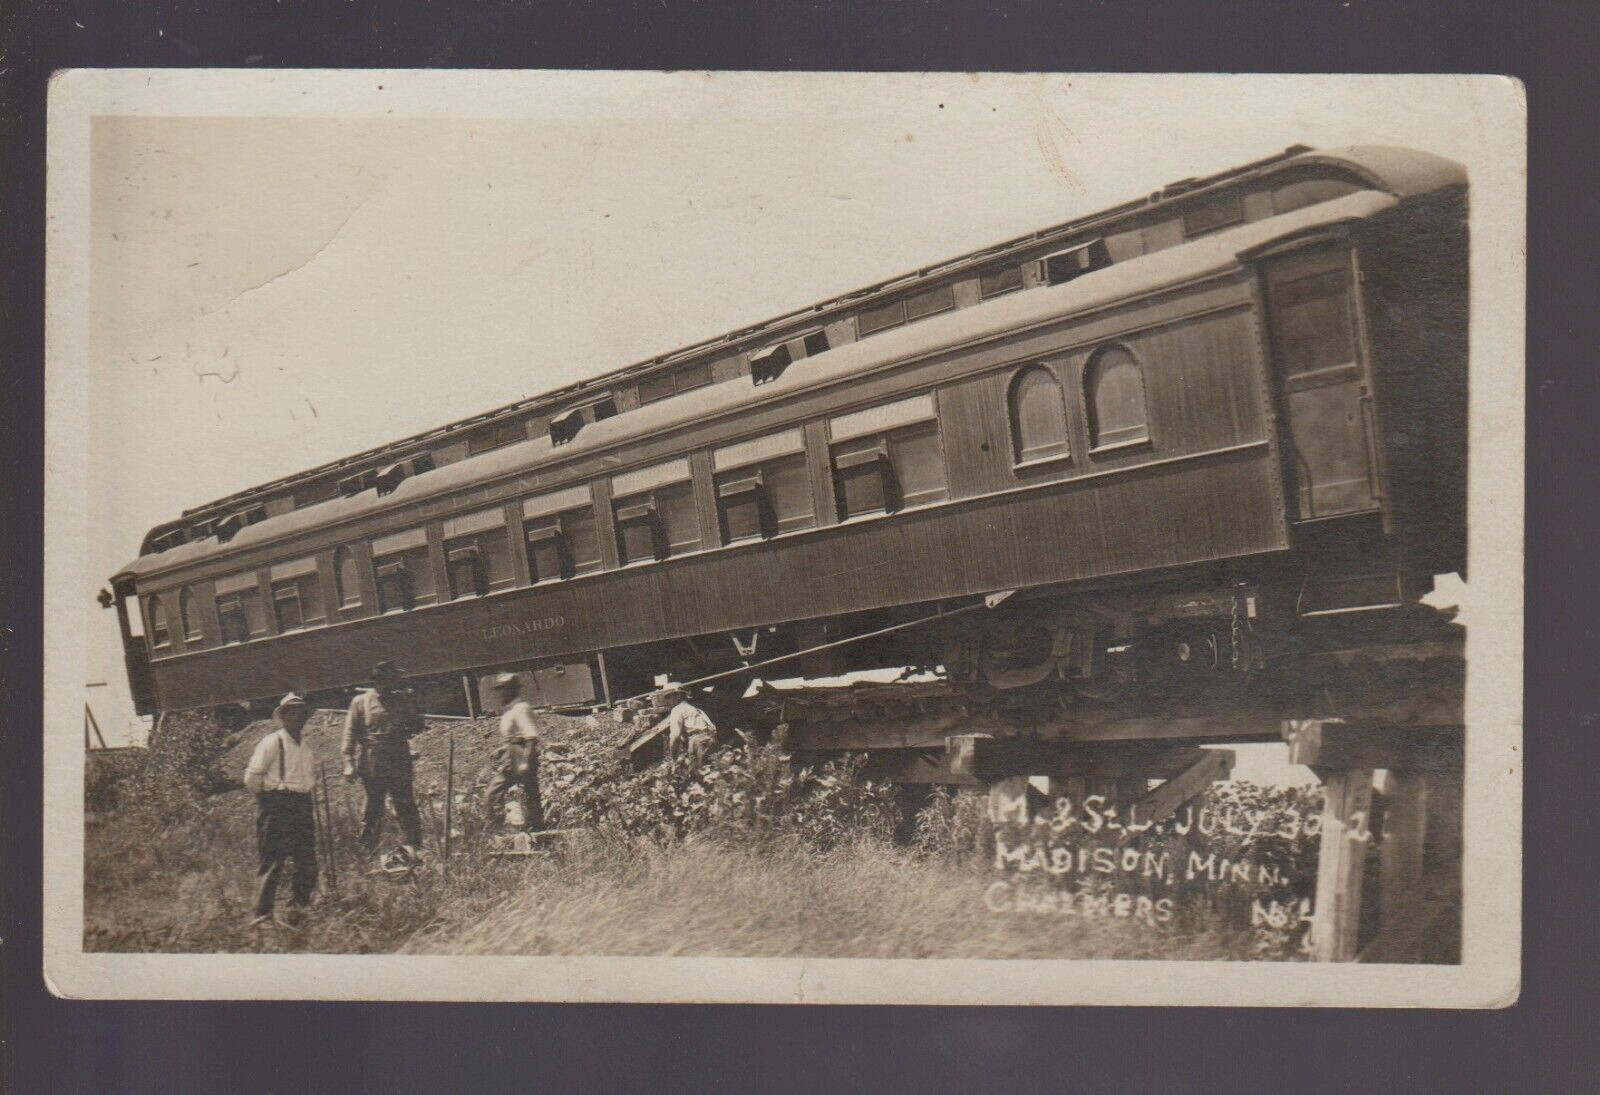 Madison MINNESOTA RPPC 1921 TRAIN WRECK Railroad Disaster M & ST. L RR nr Dawson